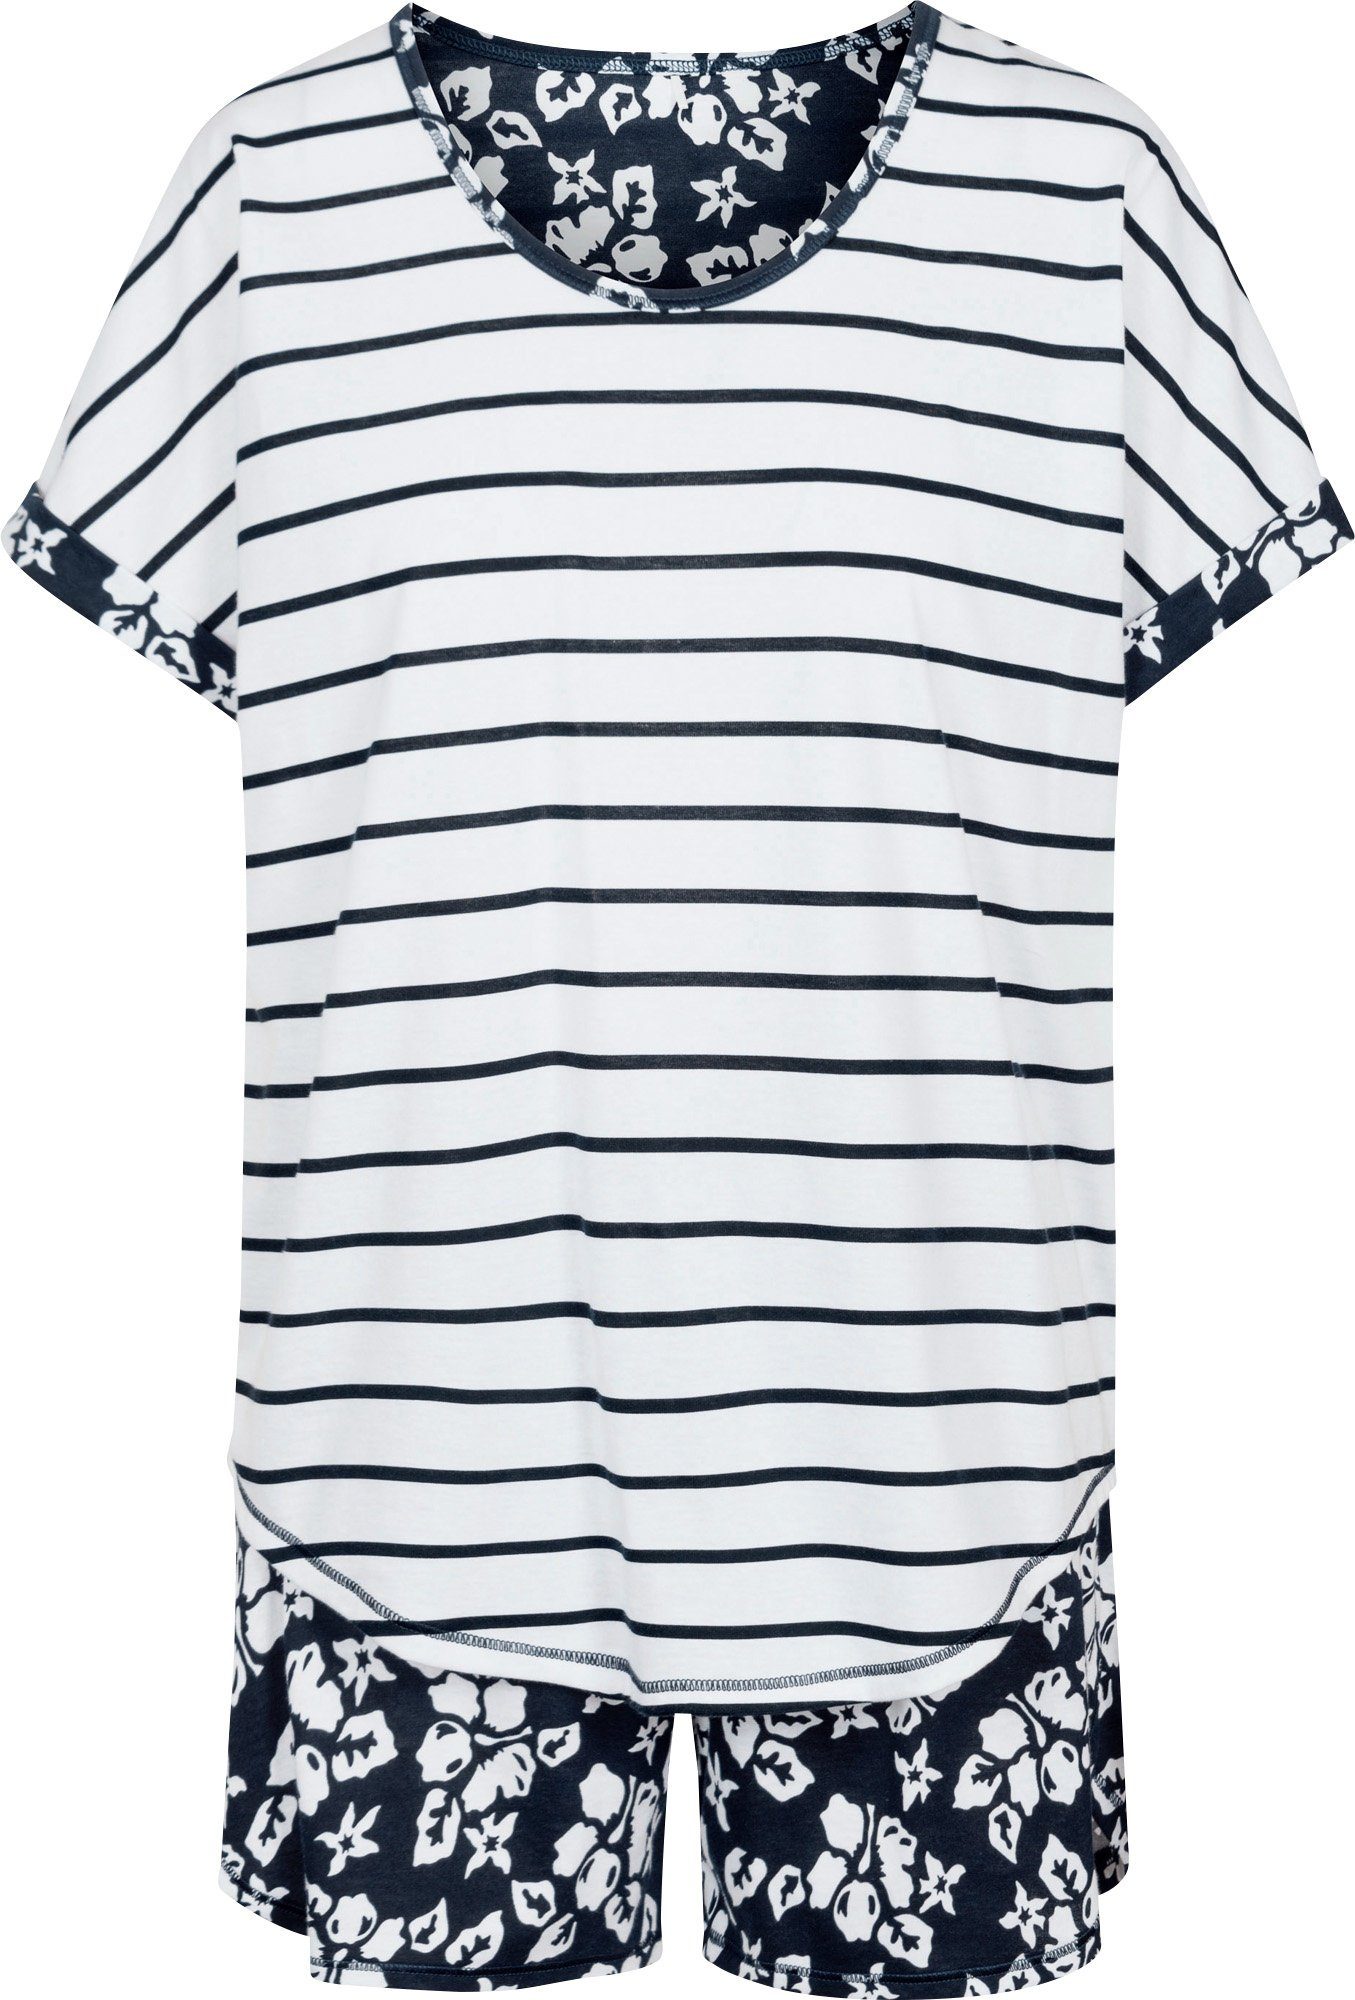 BLACK FRIDAY - Rösch Pyjama »Damen-Shorty« Single-Jersey Streifen kaufen |  OTTO